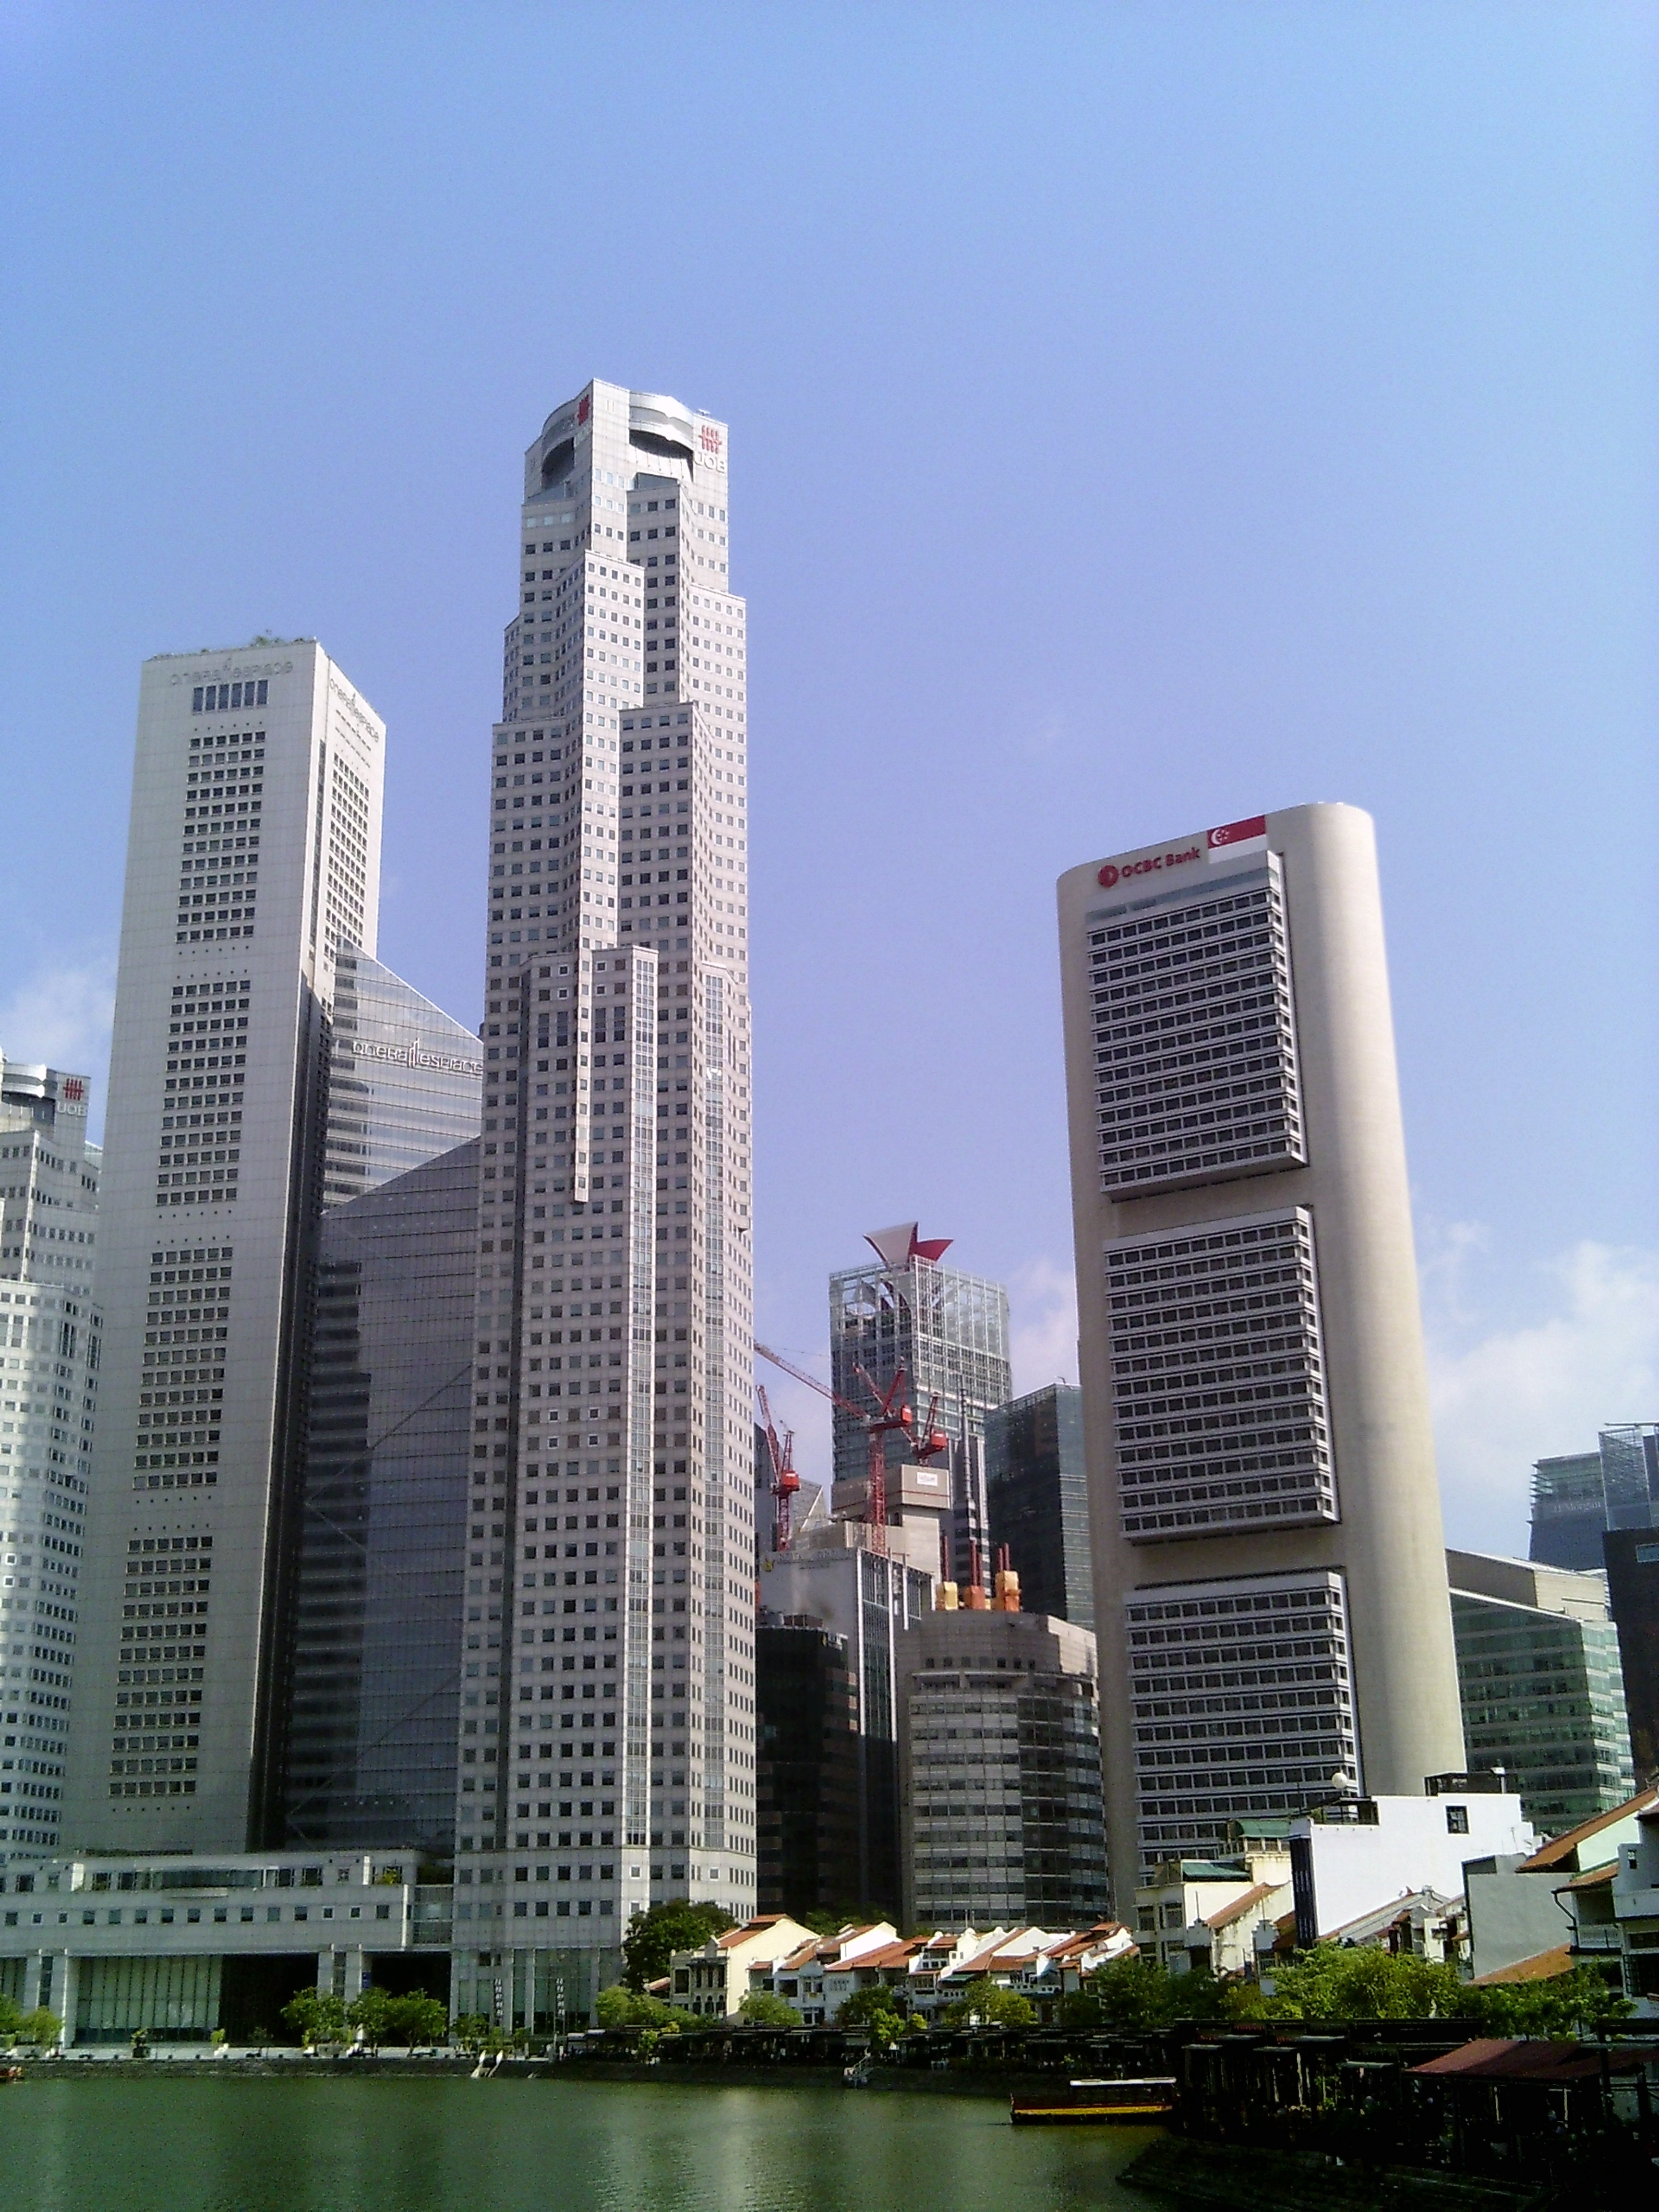 「myFirst Camera III」で実際シンガポールで撮った写真です